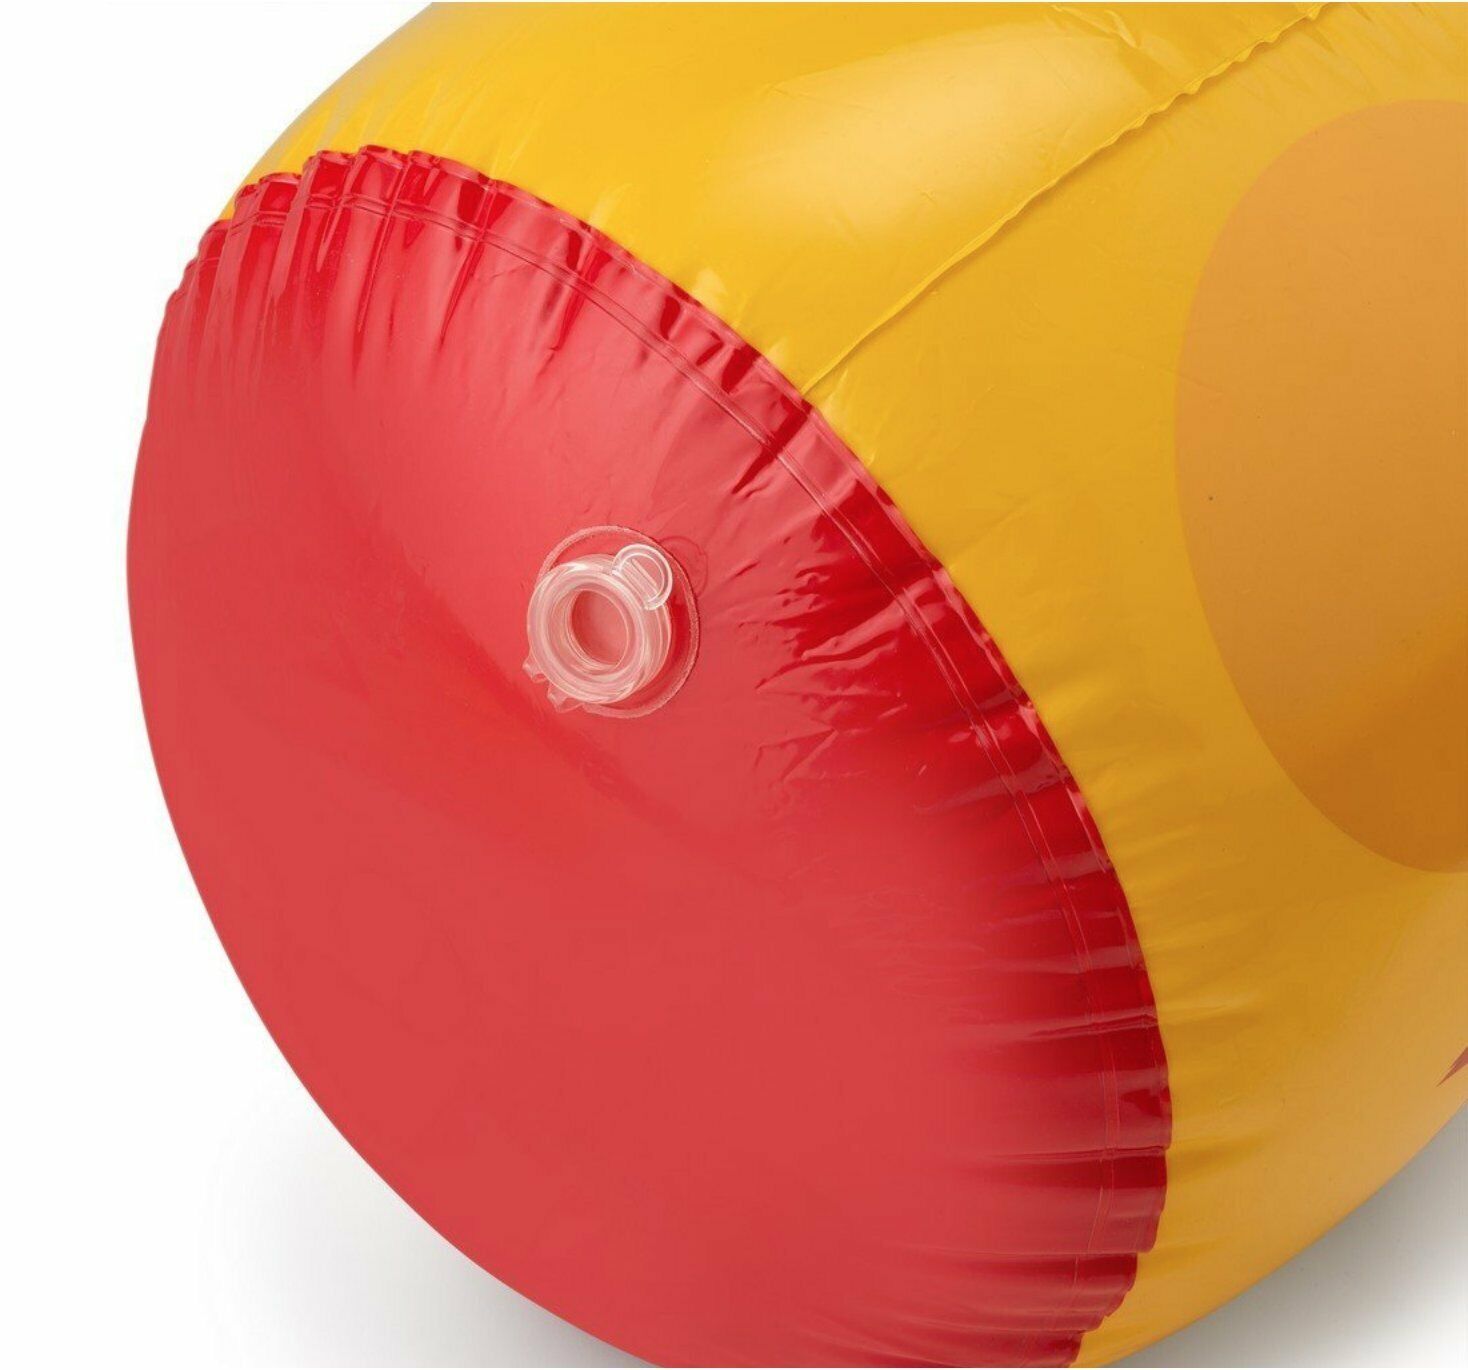 INTEX 3D Bop Bag Boxer MMA - Inflatable Blow Up Punching Bag Toy Gift  Kids Fun